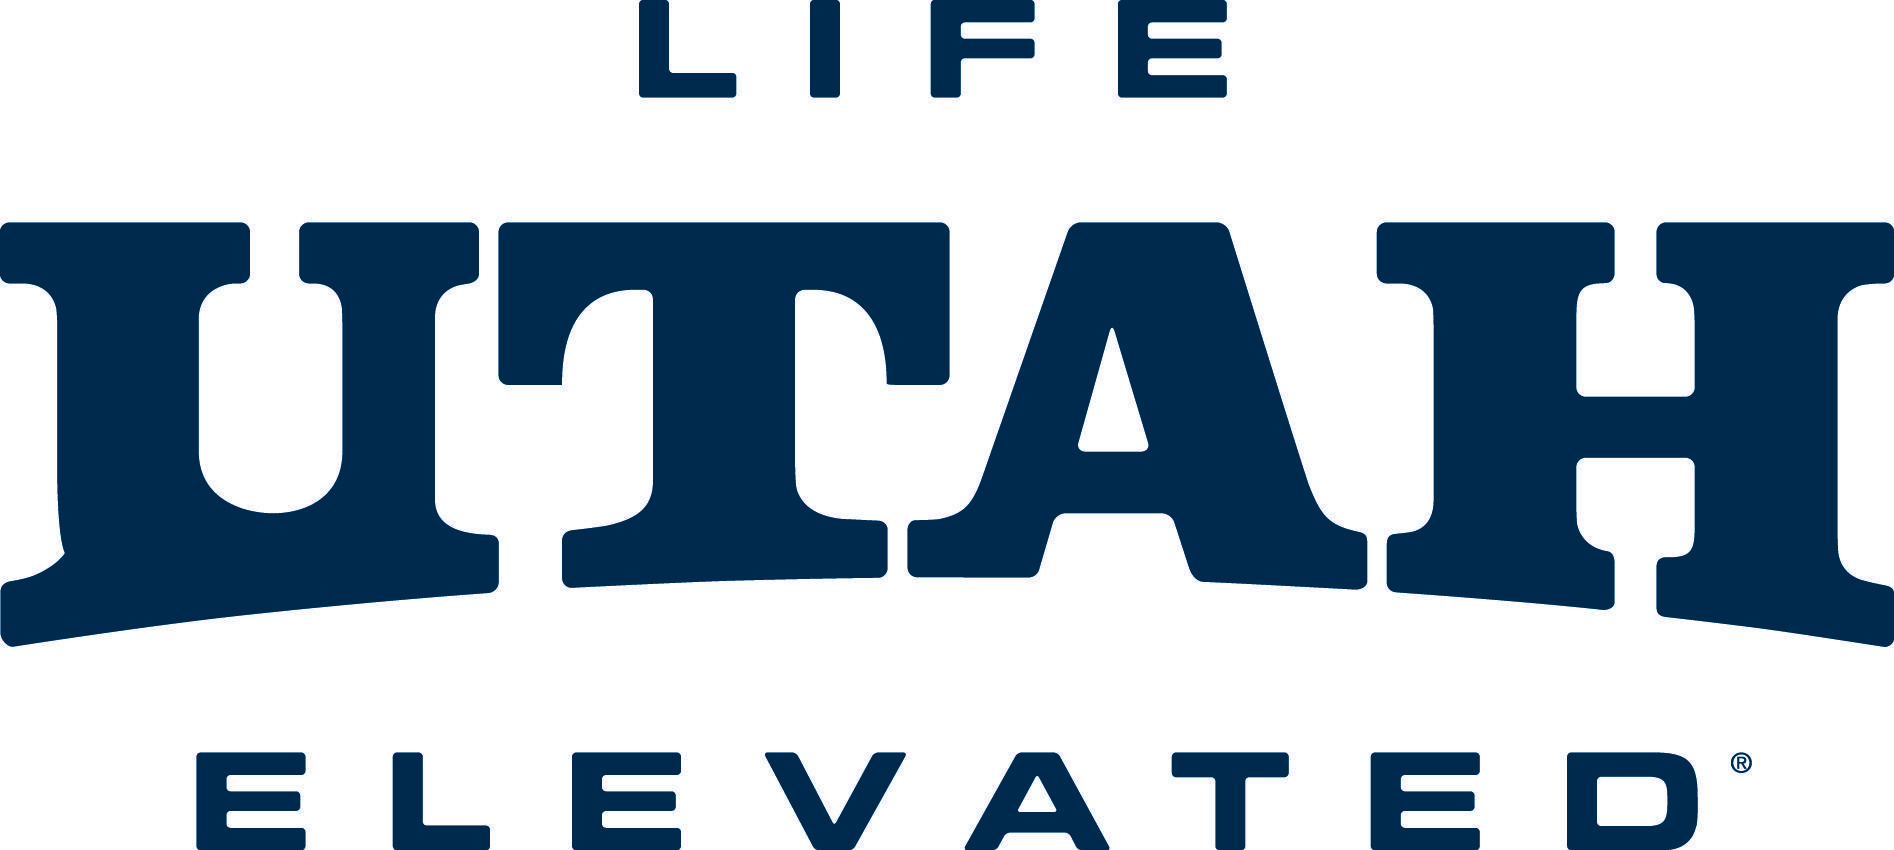 Utah Logo - The Utah Brand | Utah Office of Tourism Industry Website